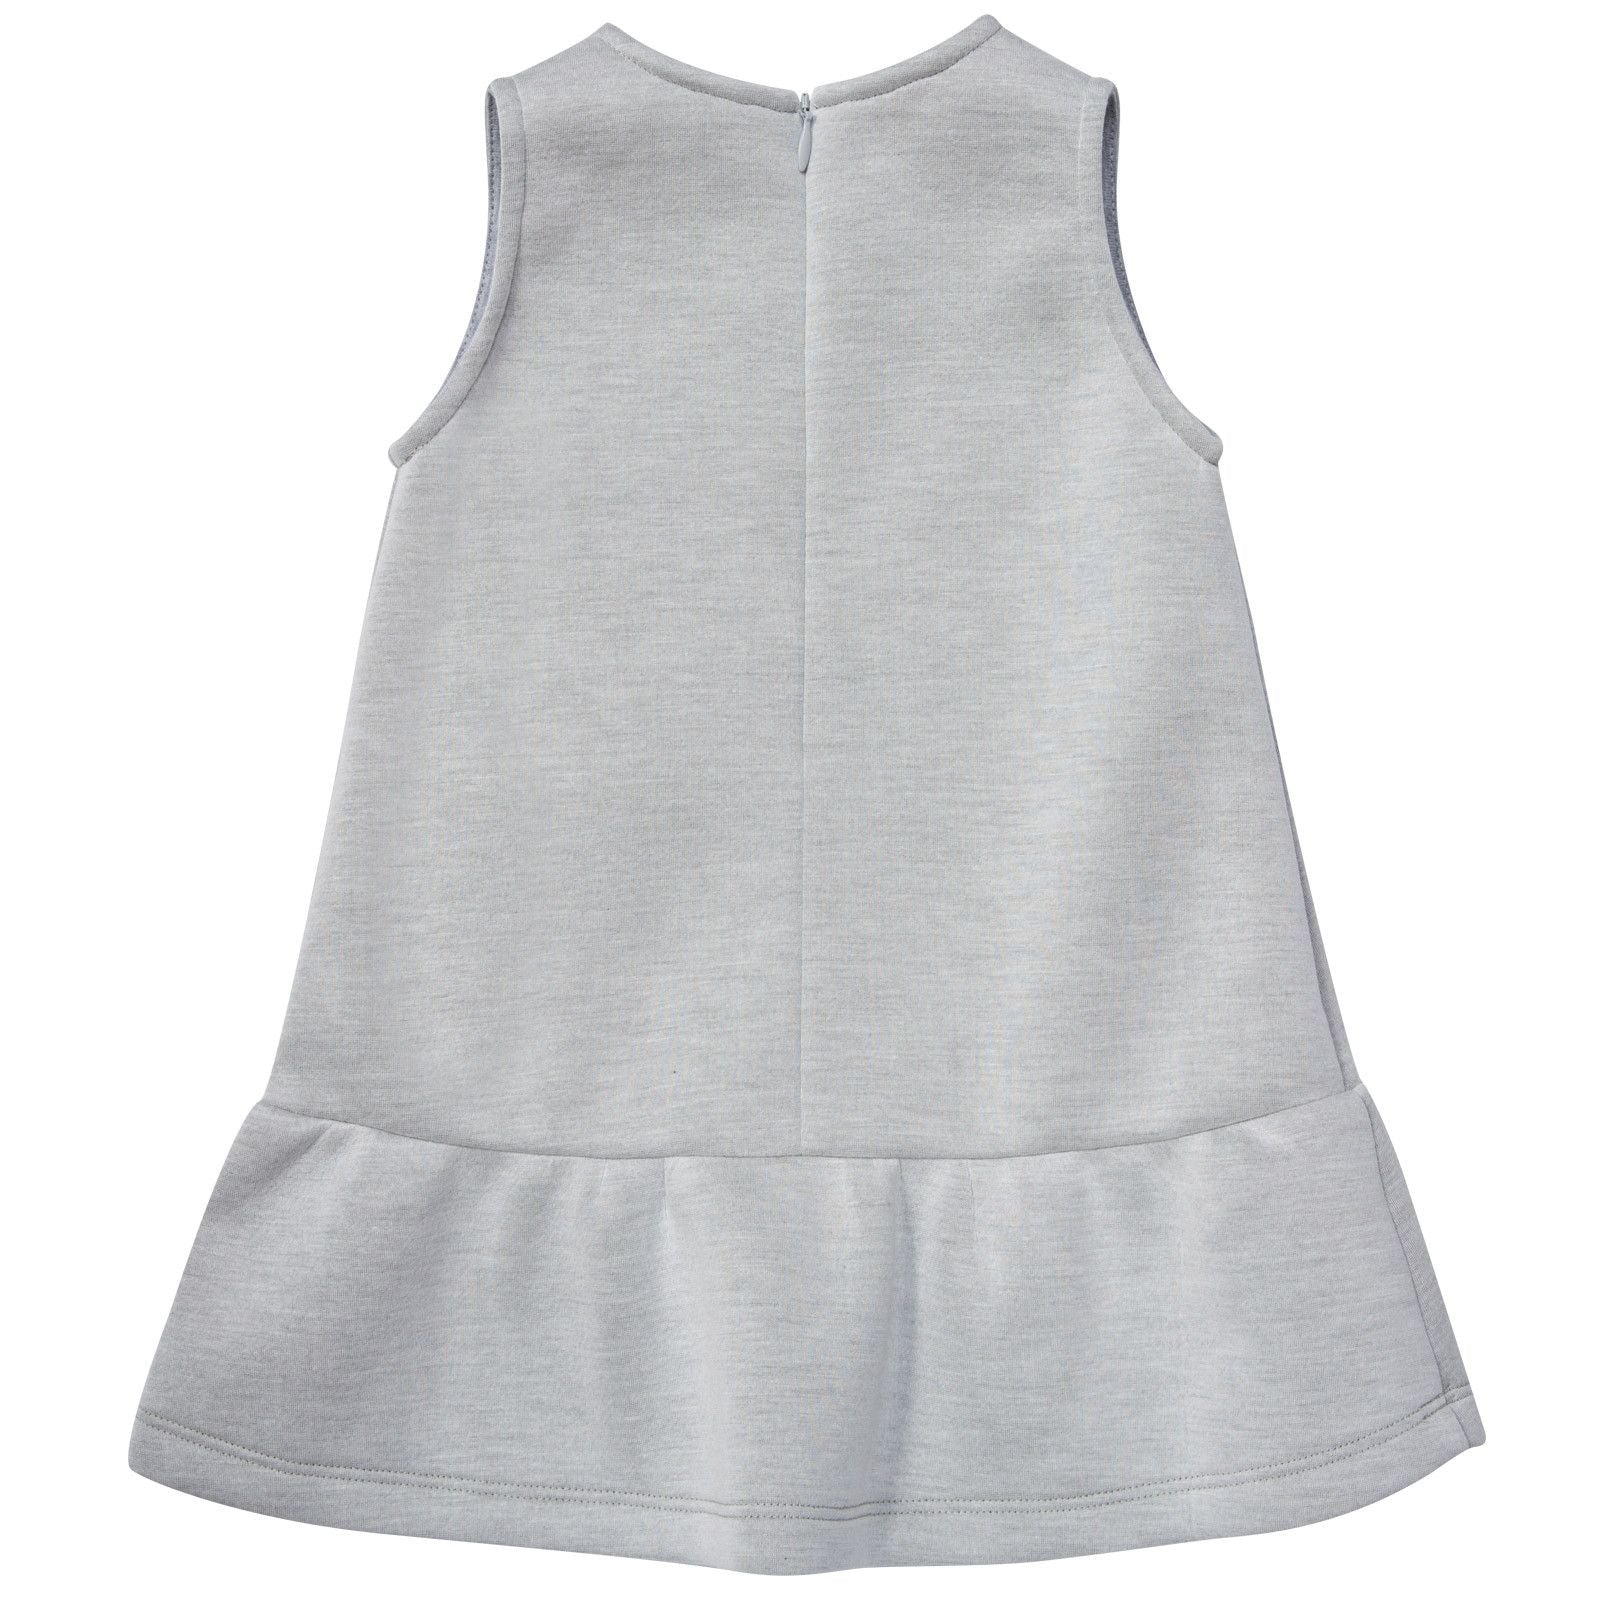 Baby Girls Ivory Prited Sleeveless Dress - CÉMAROSE | Children's Fashion Store - 2